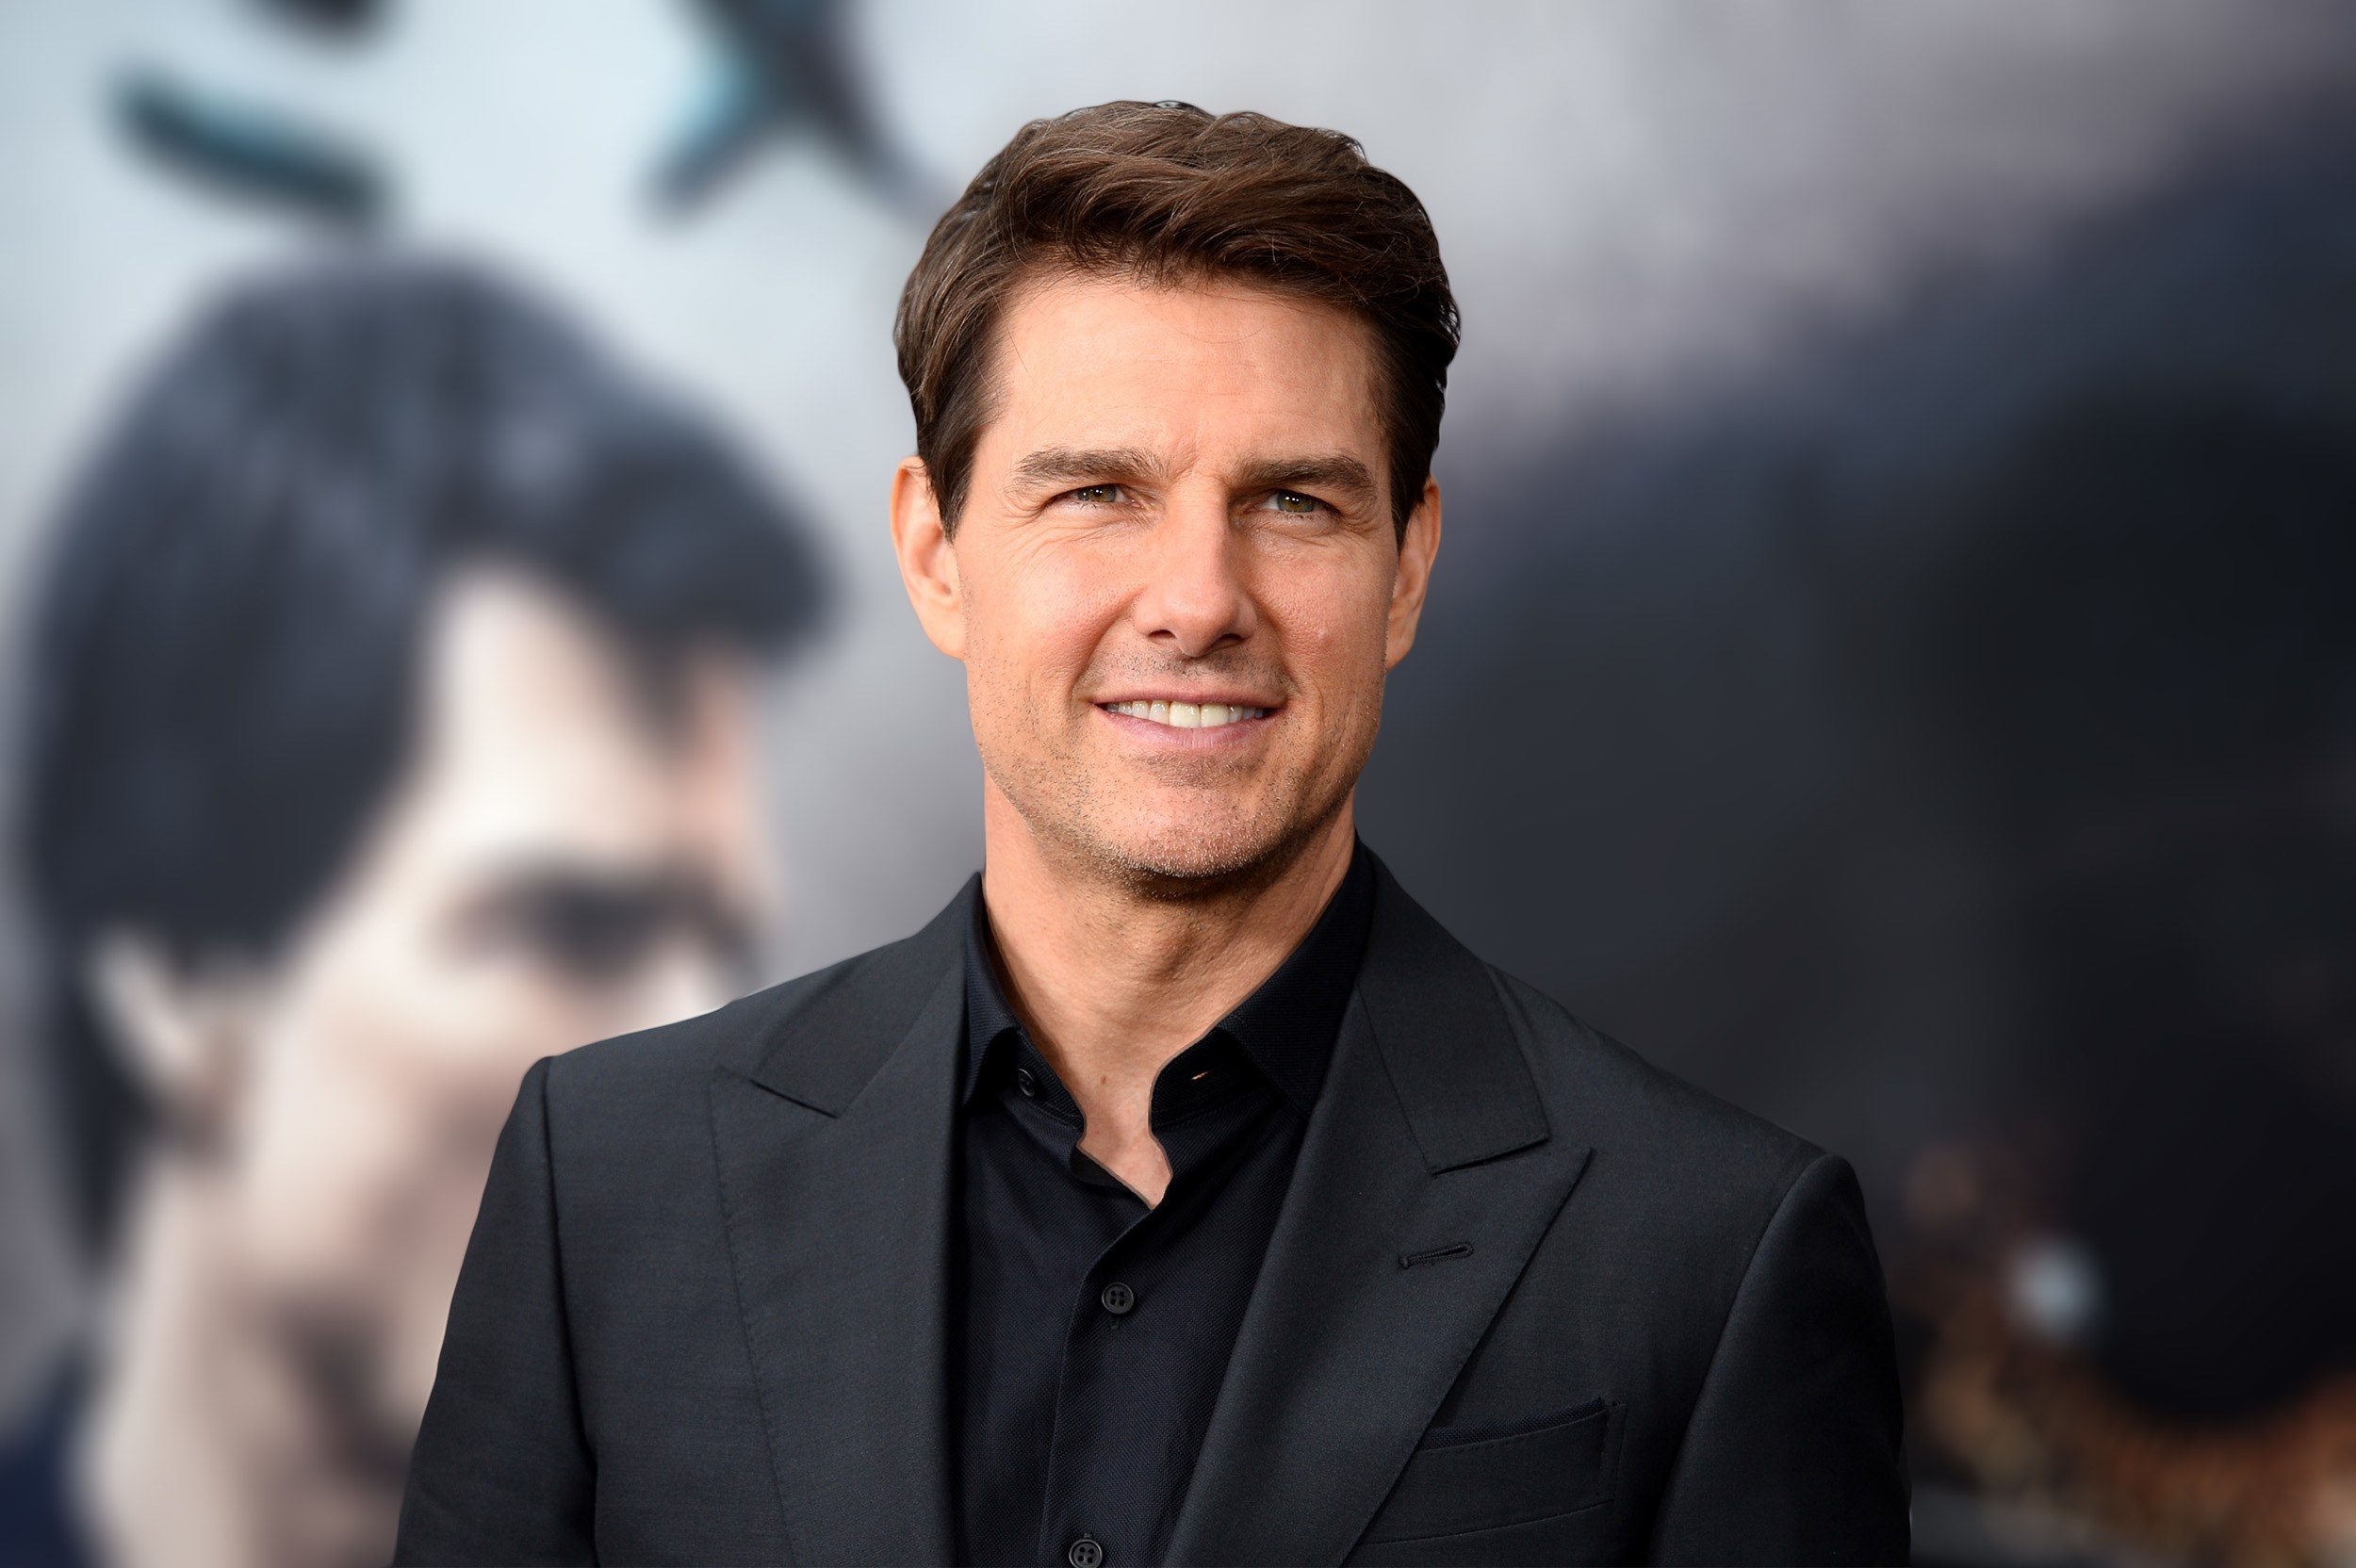 Tom Cruise laptop wallpaper, Full HD 1080p, High resolution, Famous celebrity, 2500x1670 HD Desktop